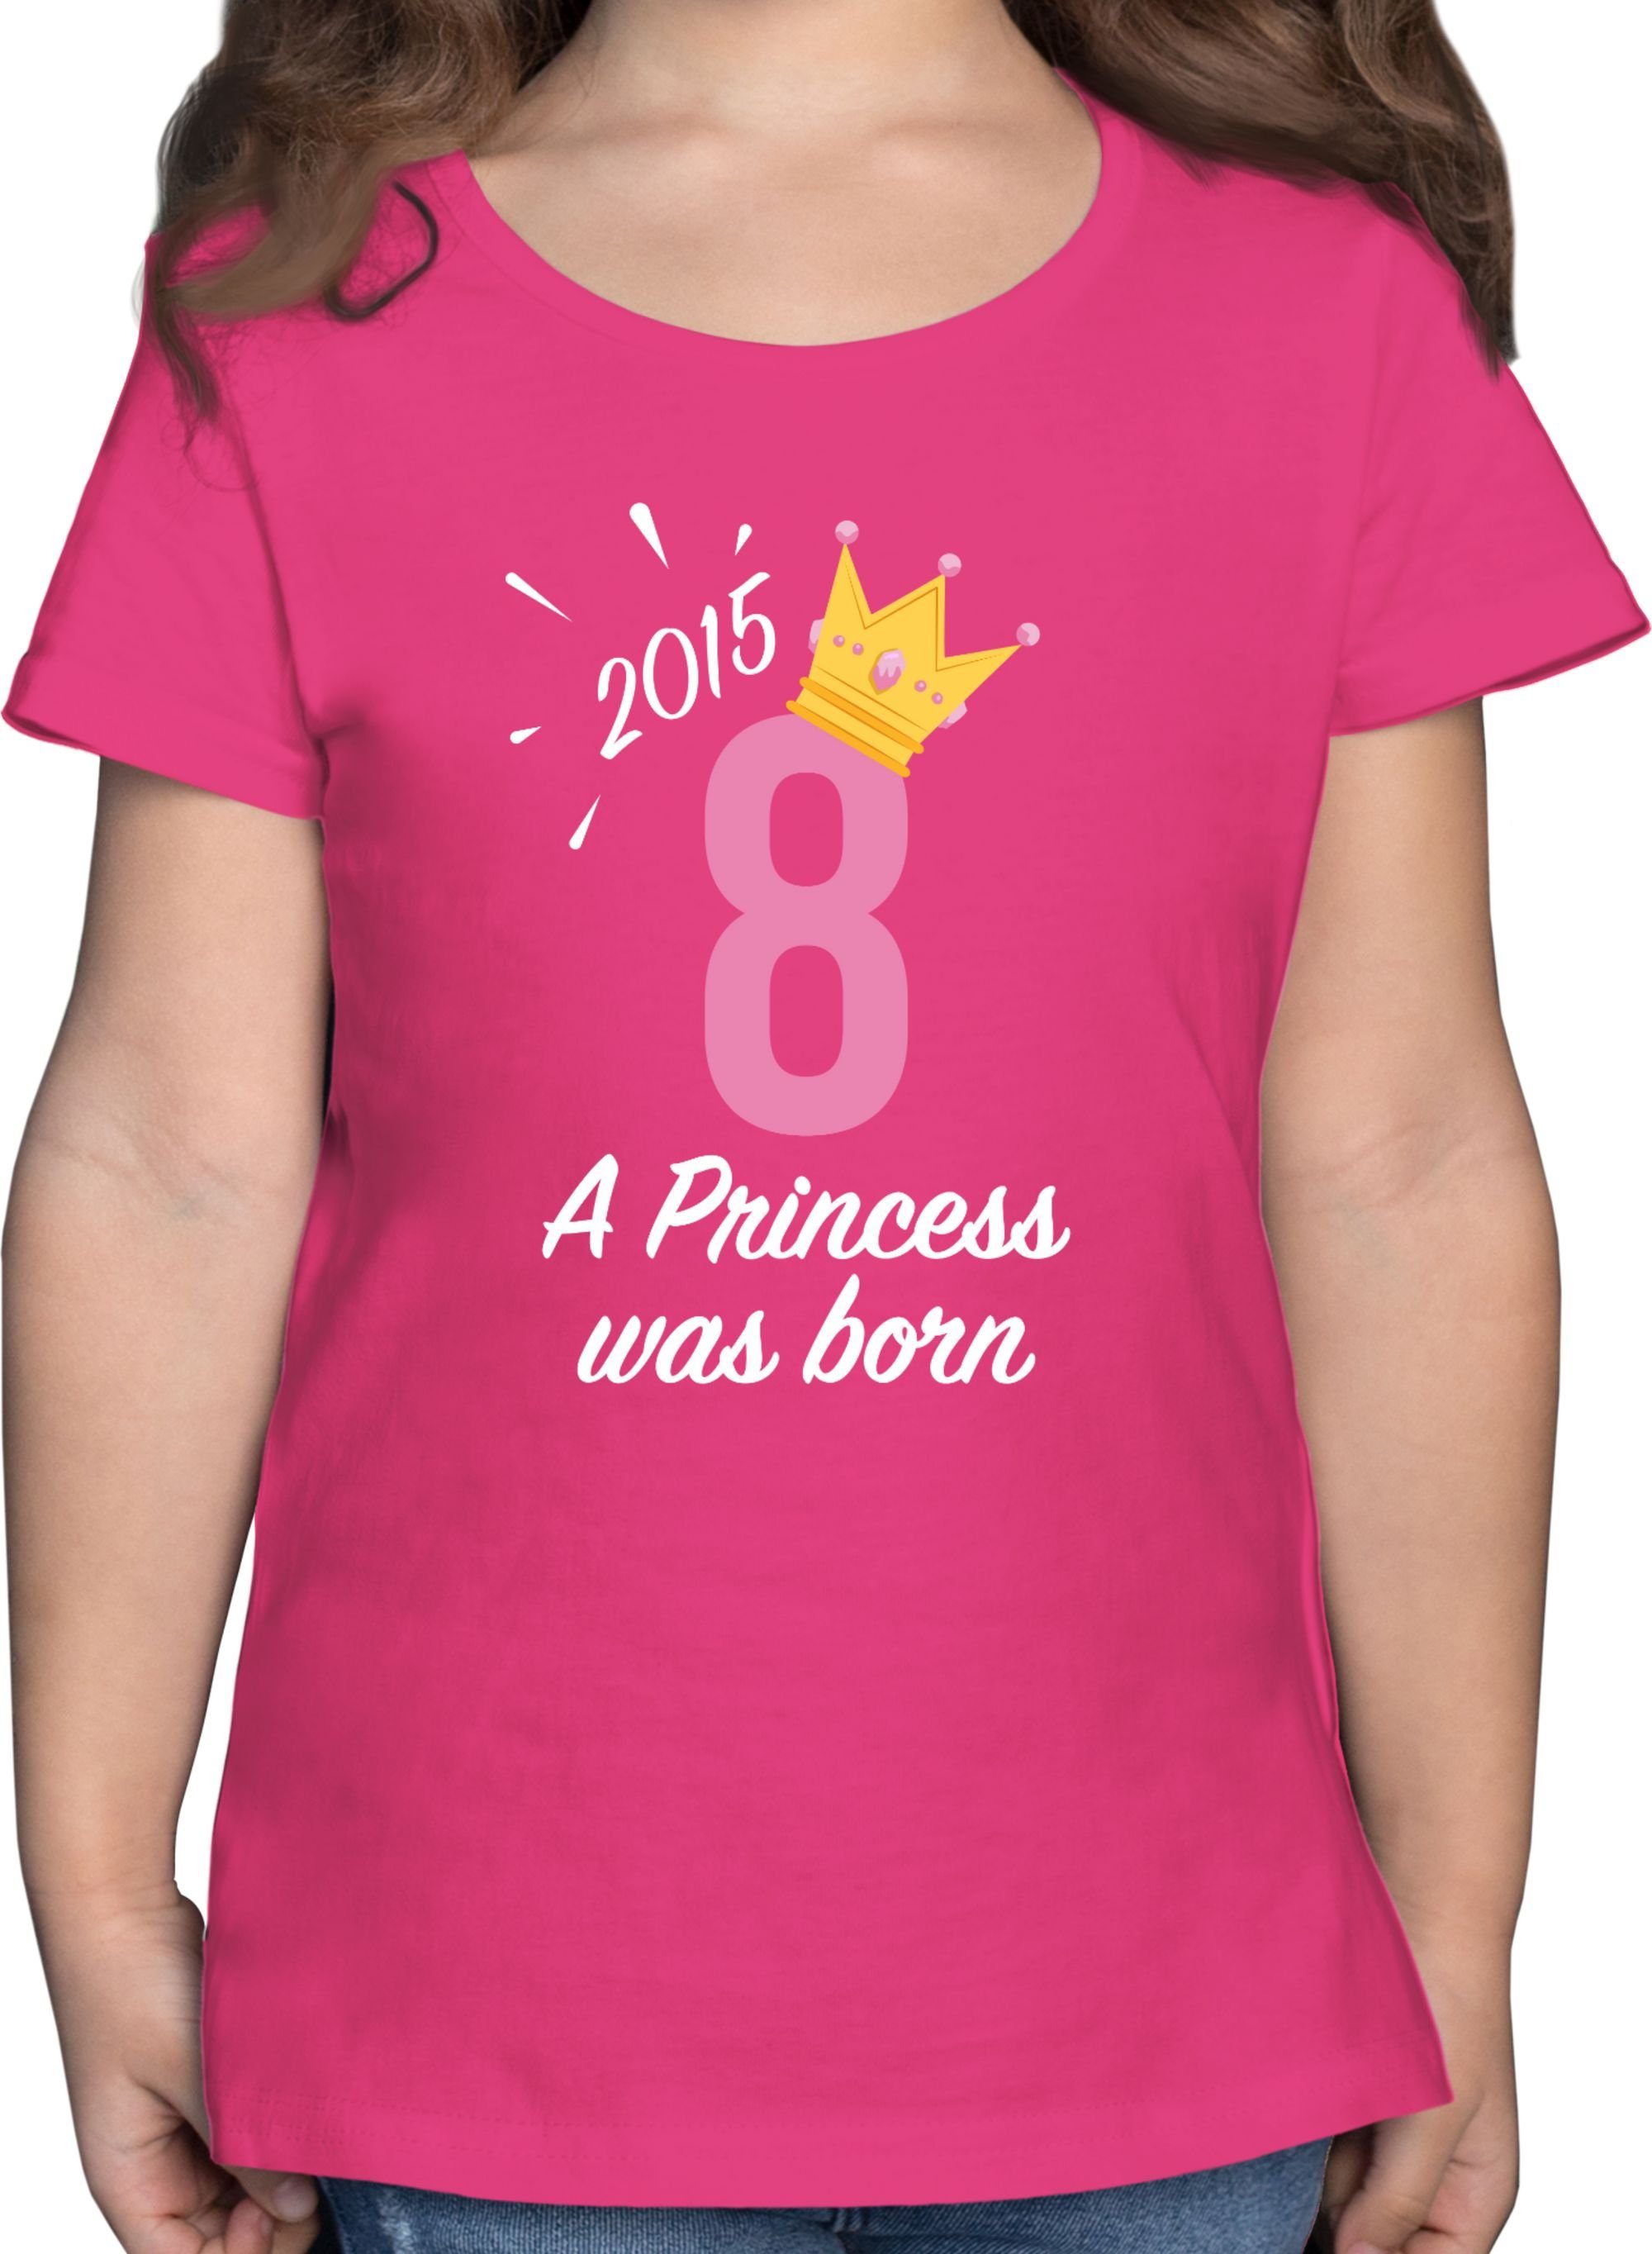 Shirtracer T-Shirt Achter Mädchen 8. 2015 Princess Fuchsia Geburtstag 1